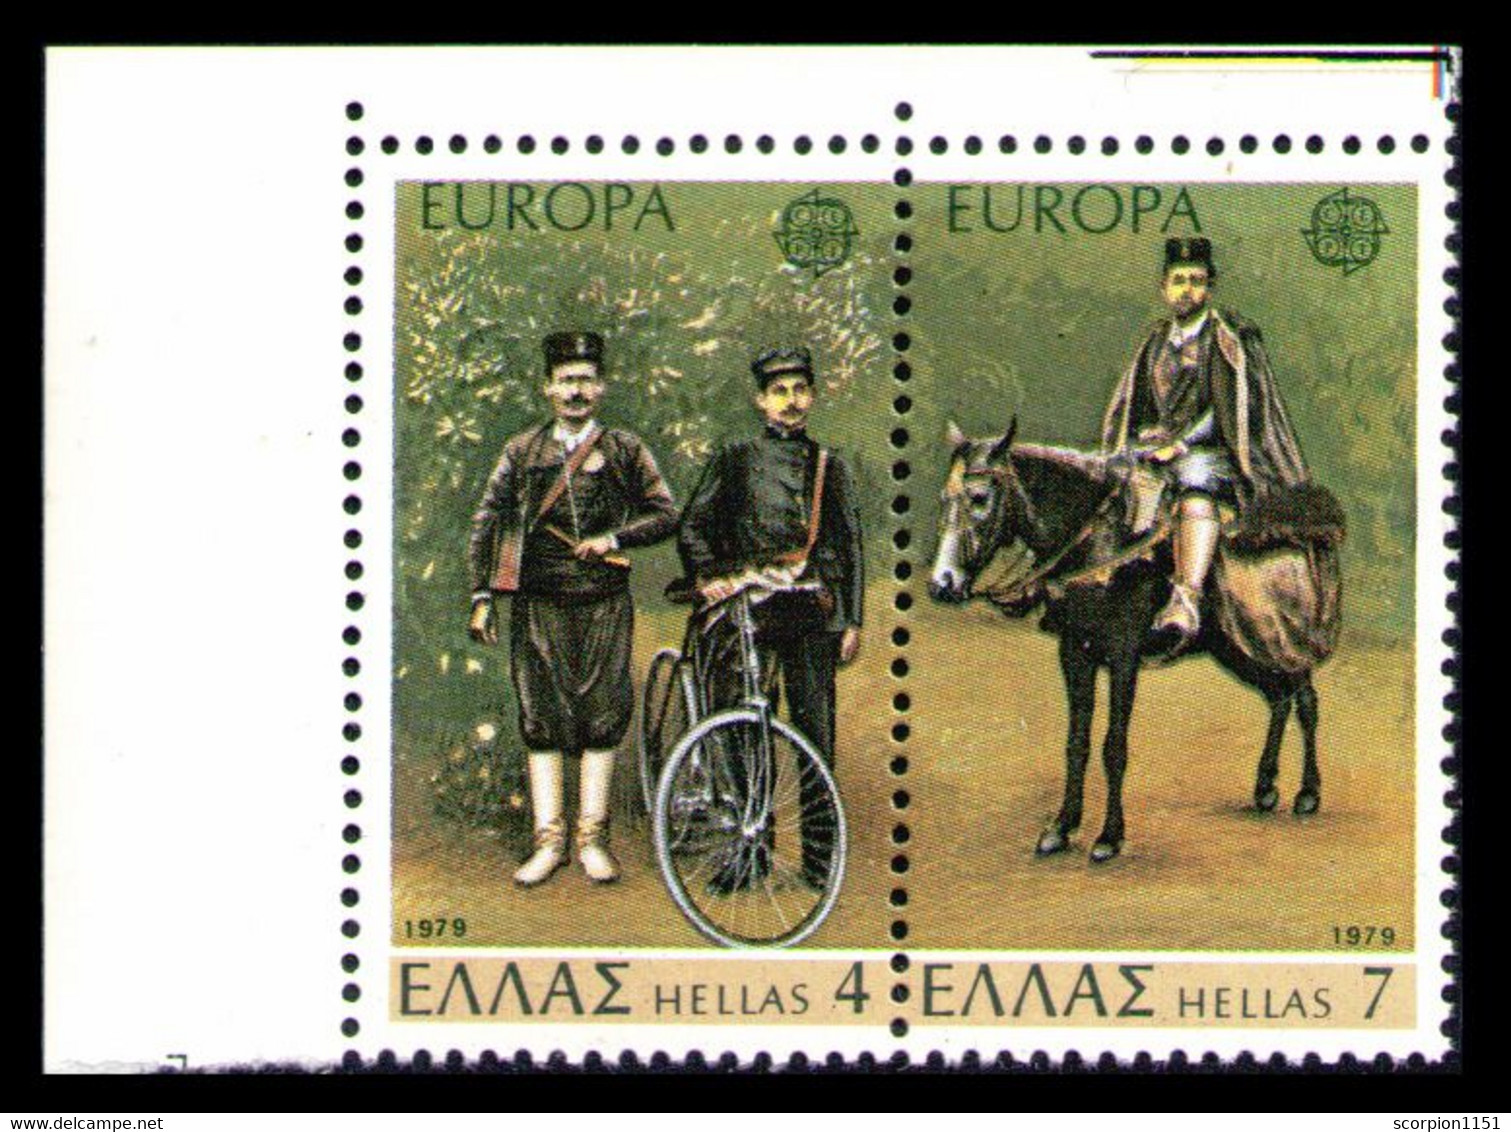 GREECE 1979 - EUROPA Set MNH** - Nuevos